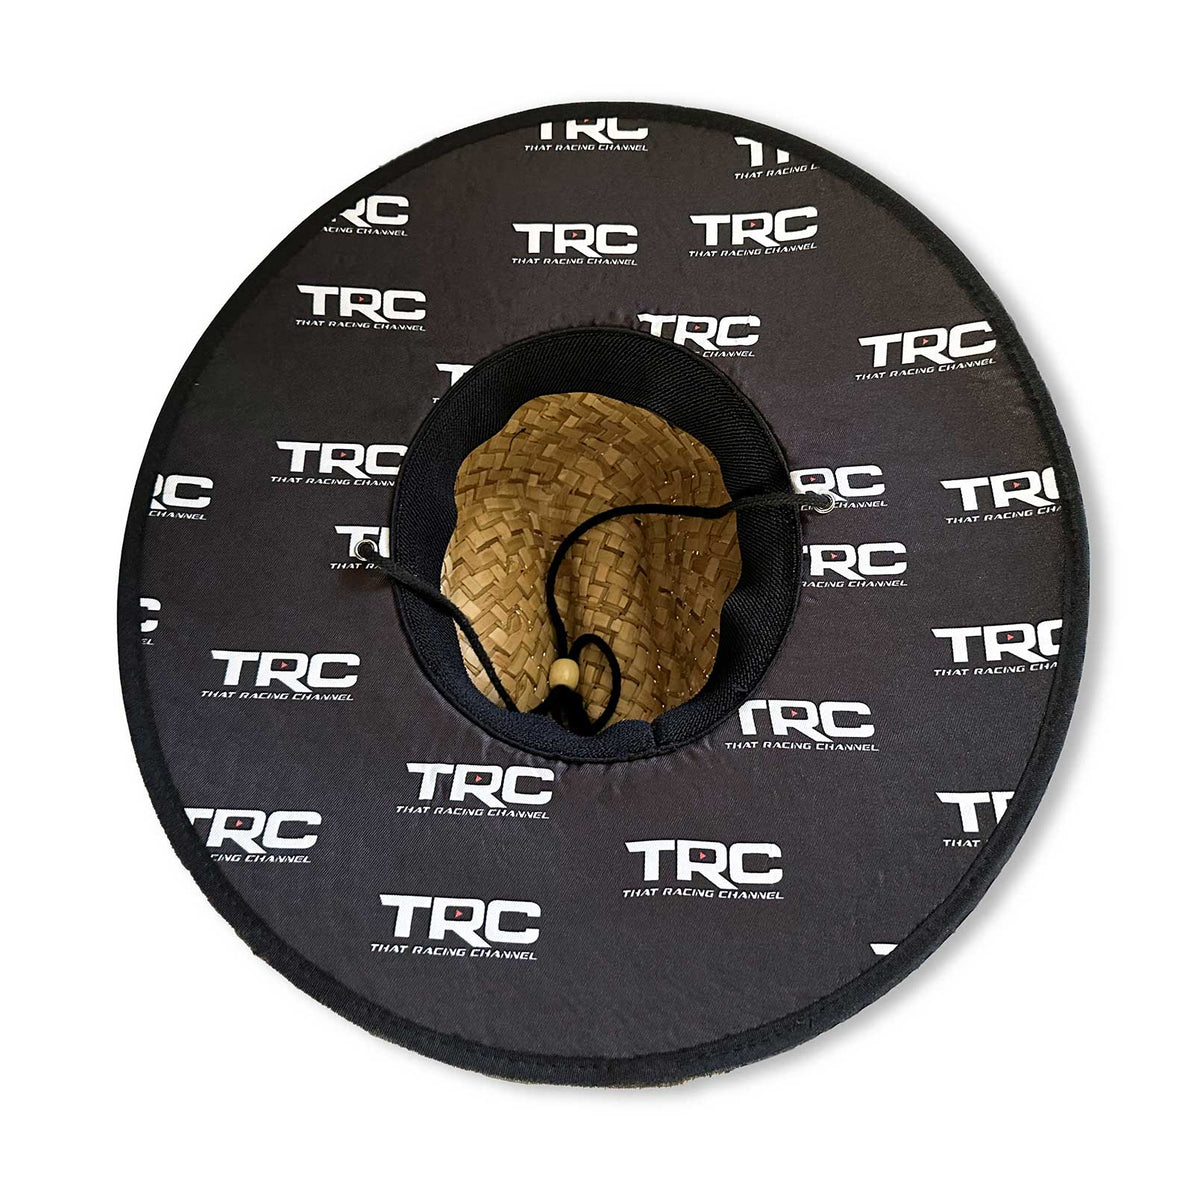 TRC Straw Hat (380 Entries)